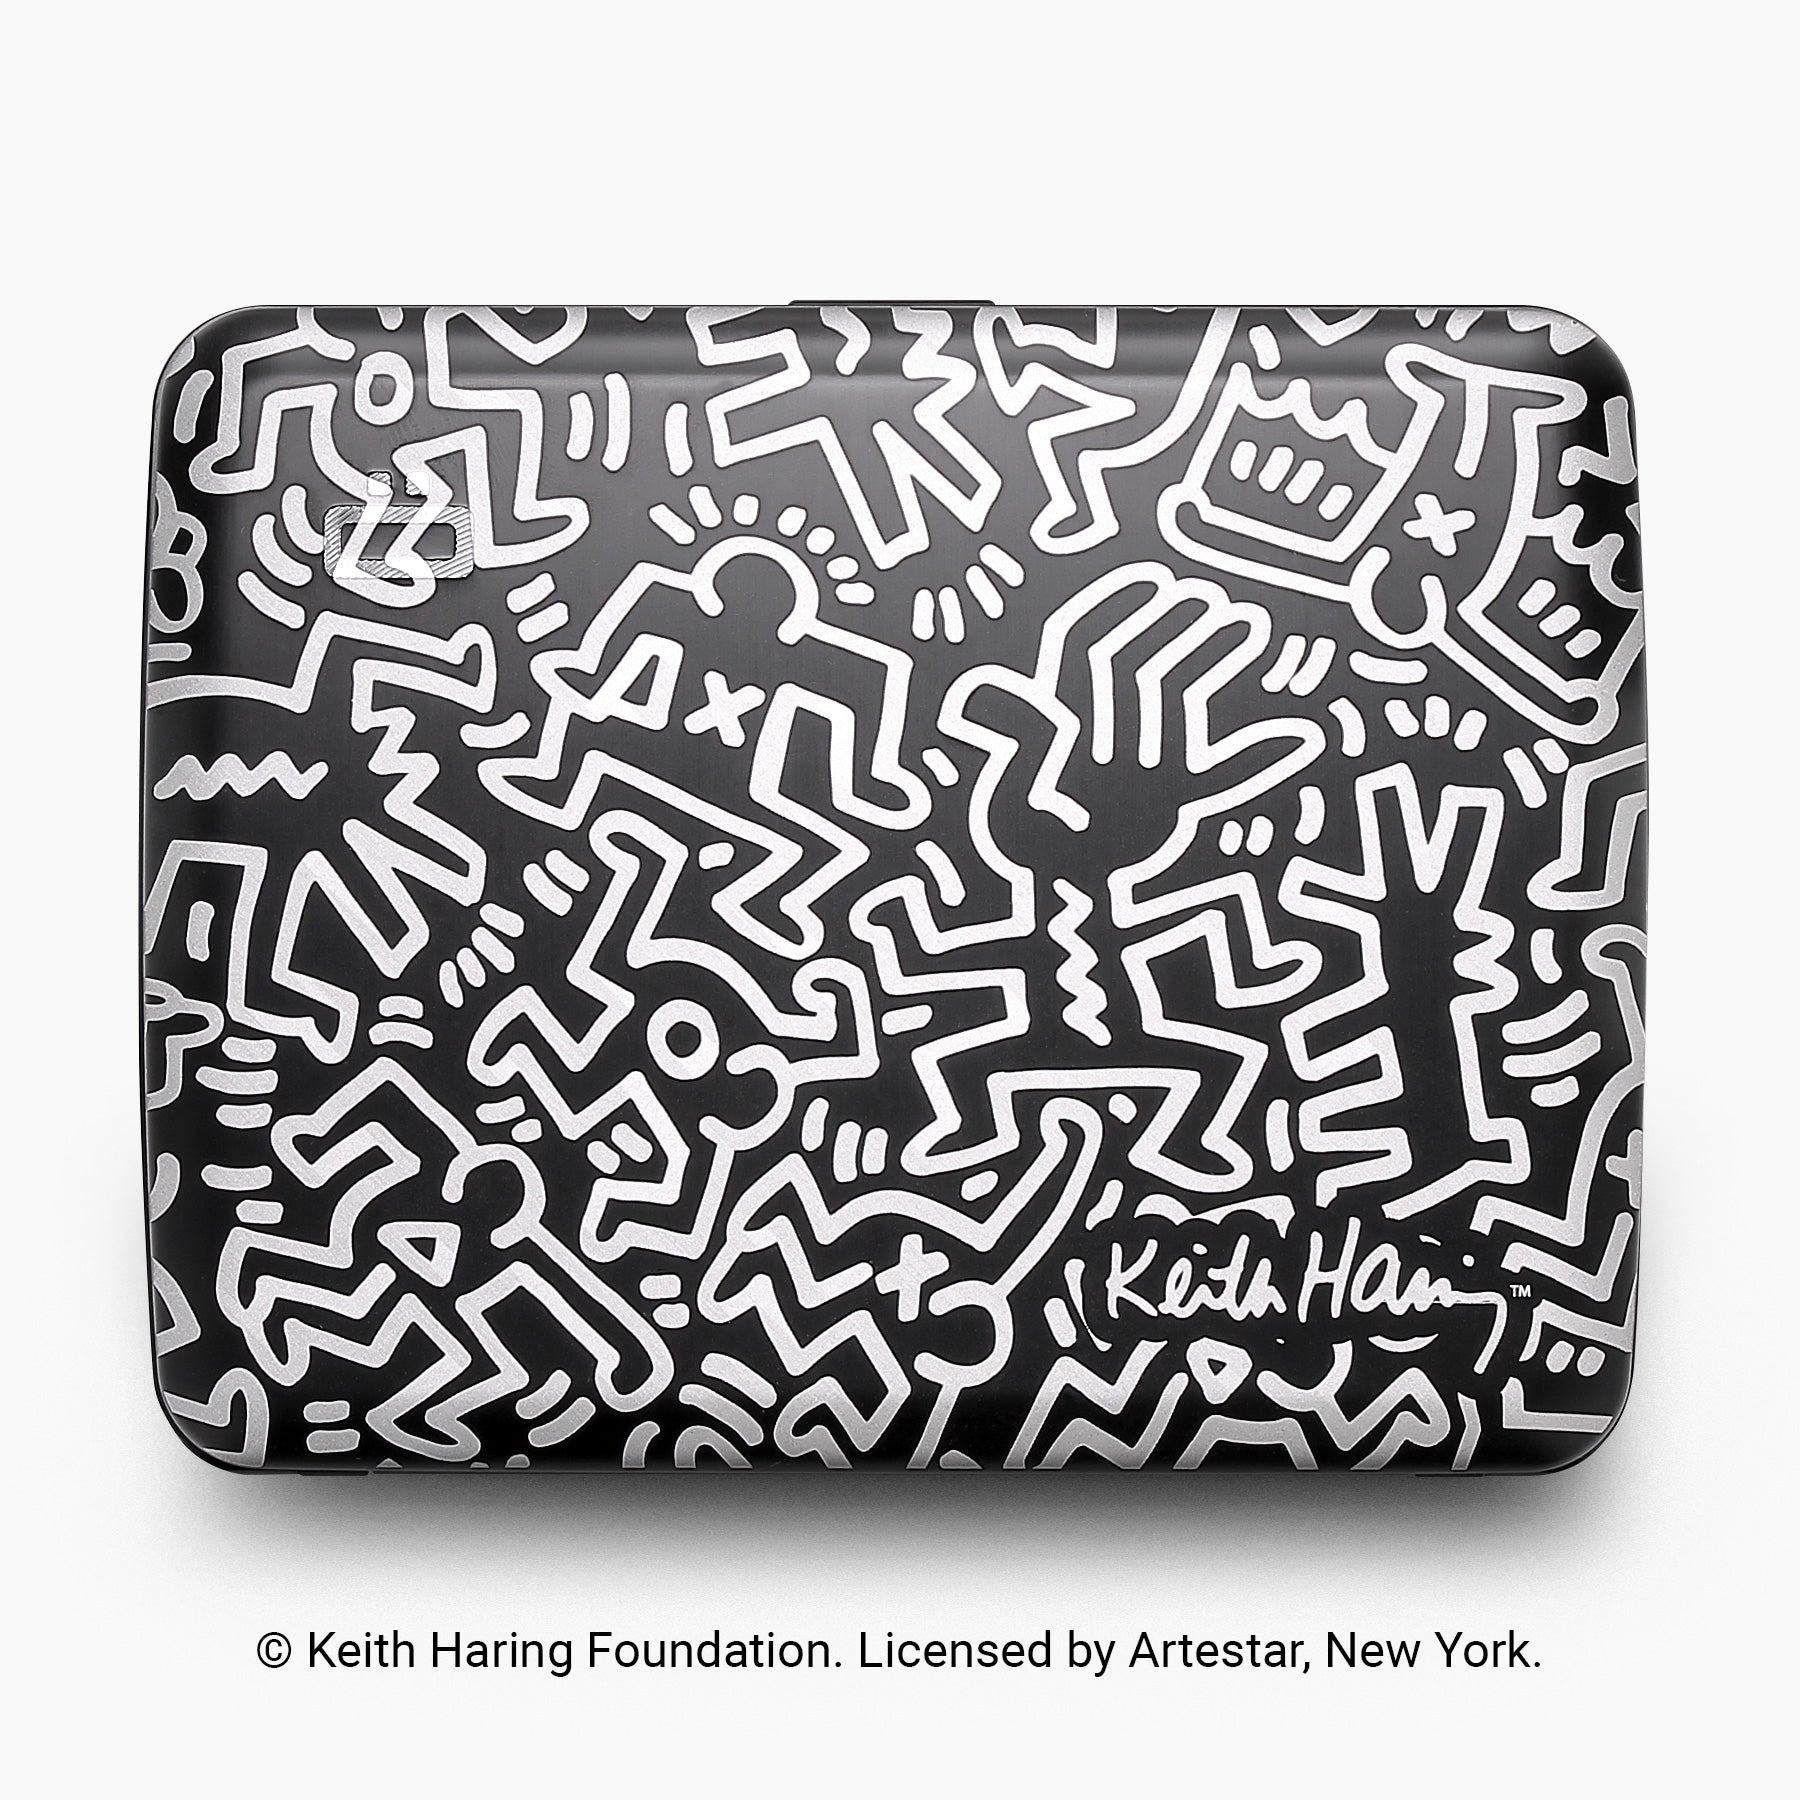 SMART CASE V2 Large | Keith Haring Color